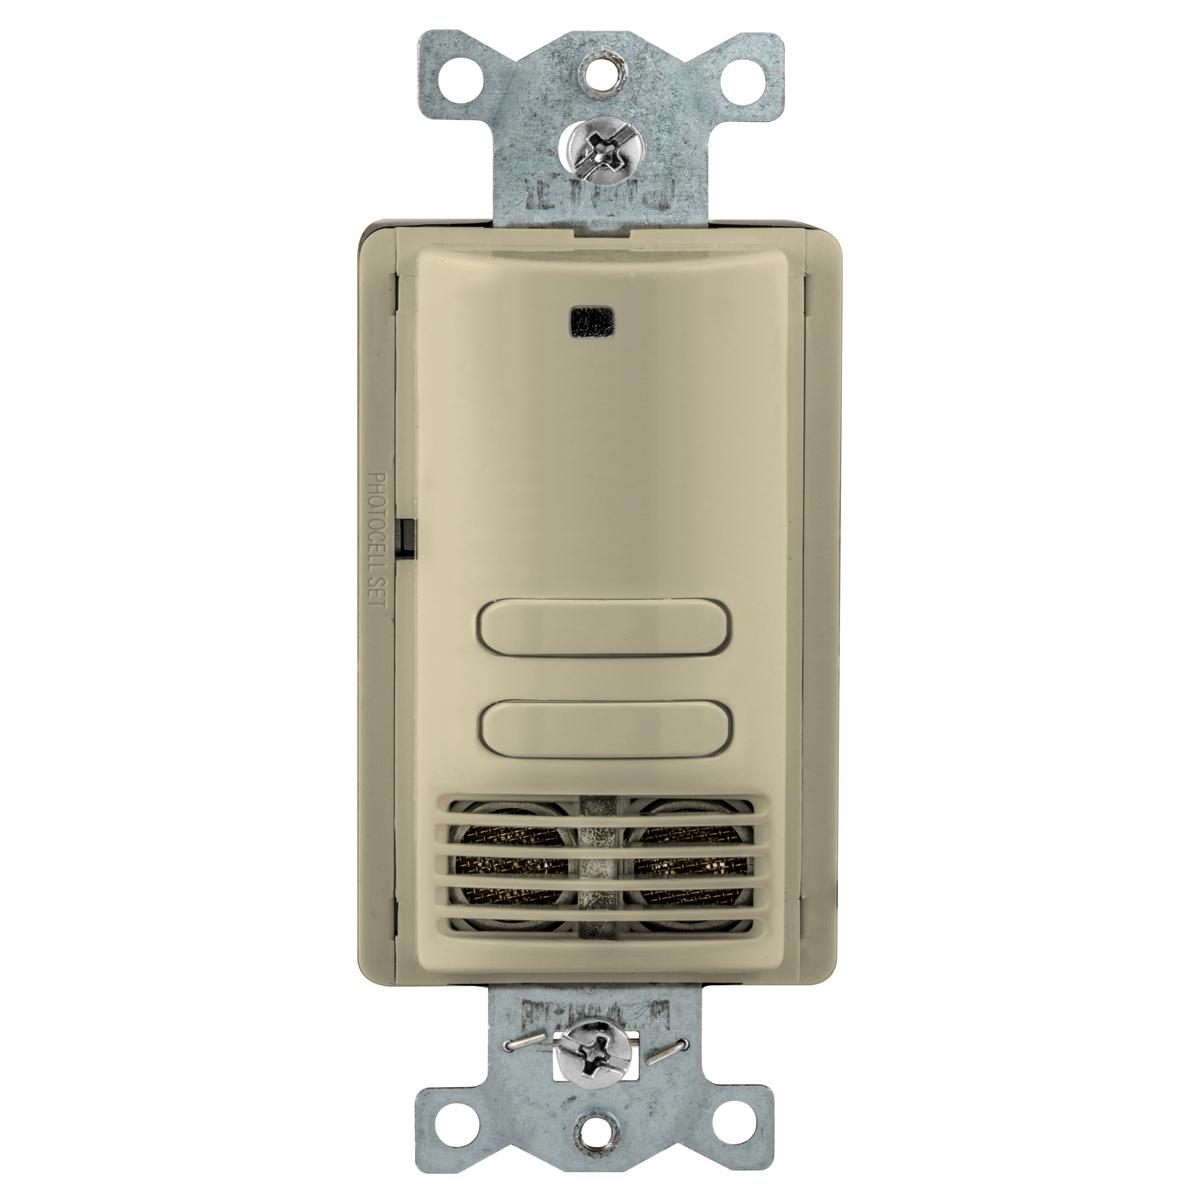 Hubbell AU2001I22 Vacancy Sensors, Wall Switch, AdaptiveUltrasonic, 2 Circuit, 120/277V AC, Ivory 